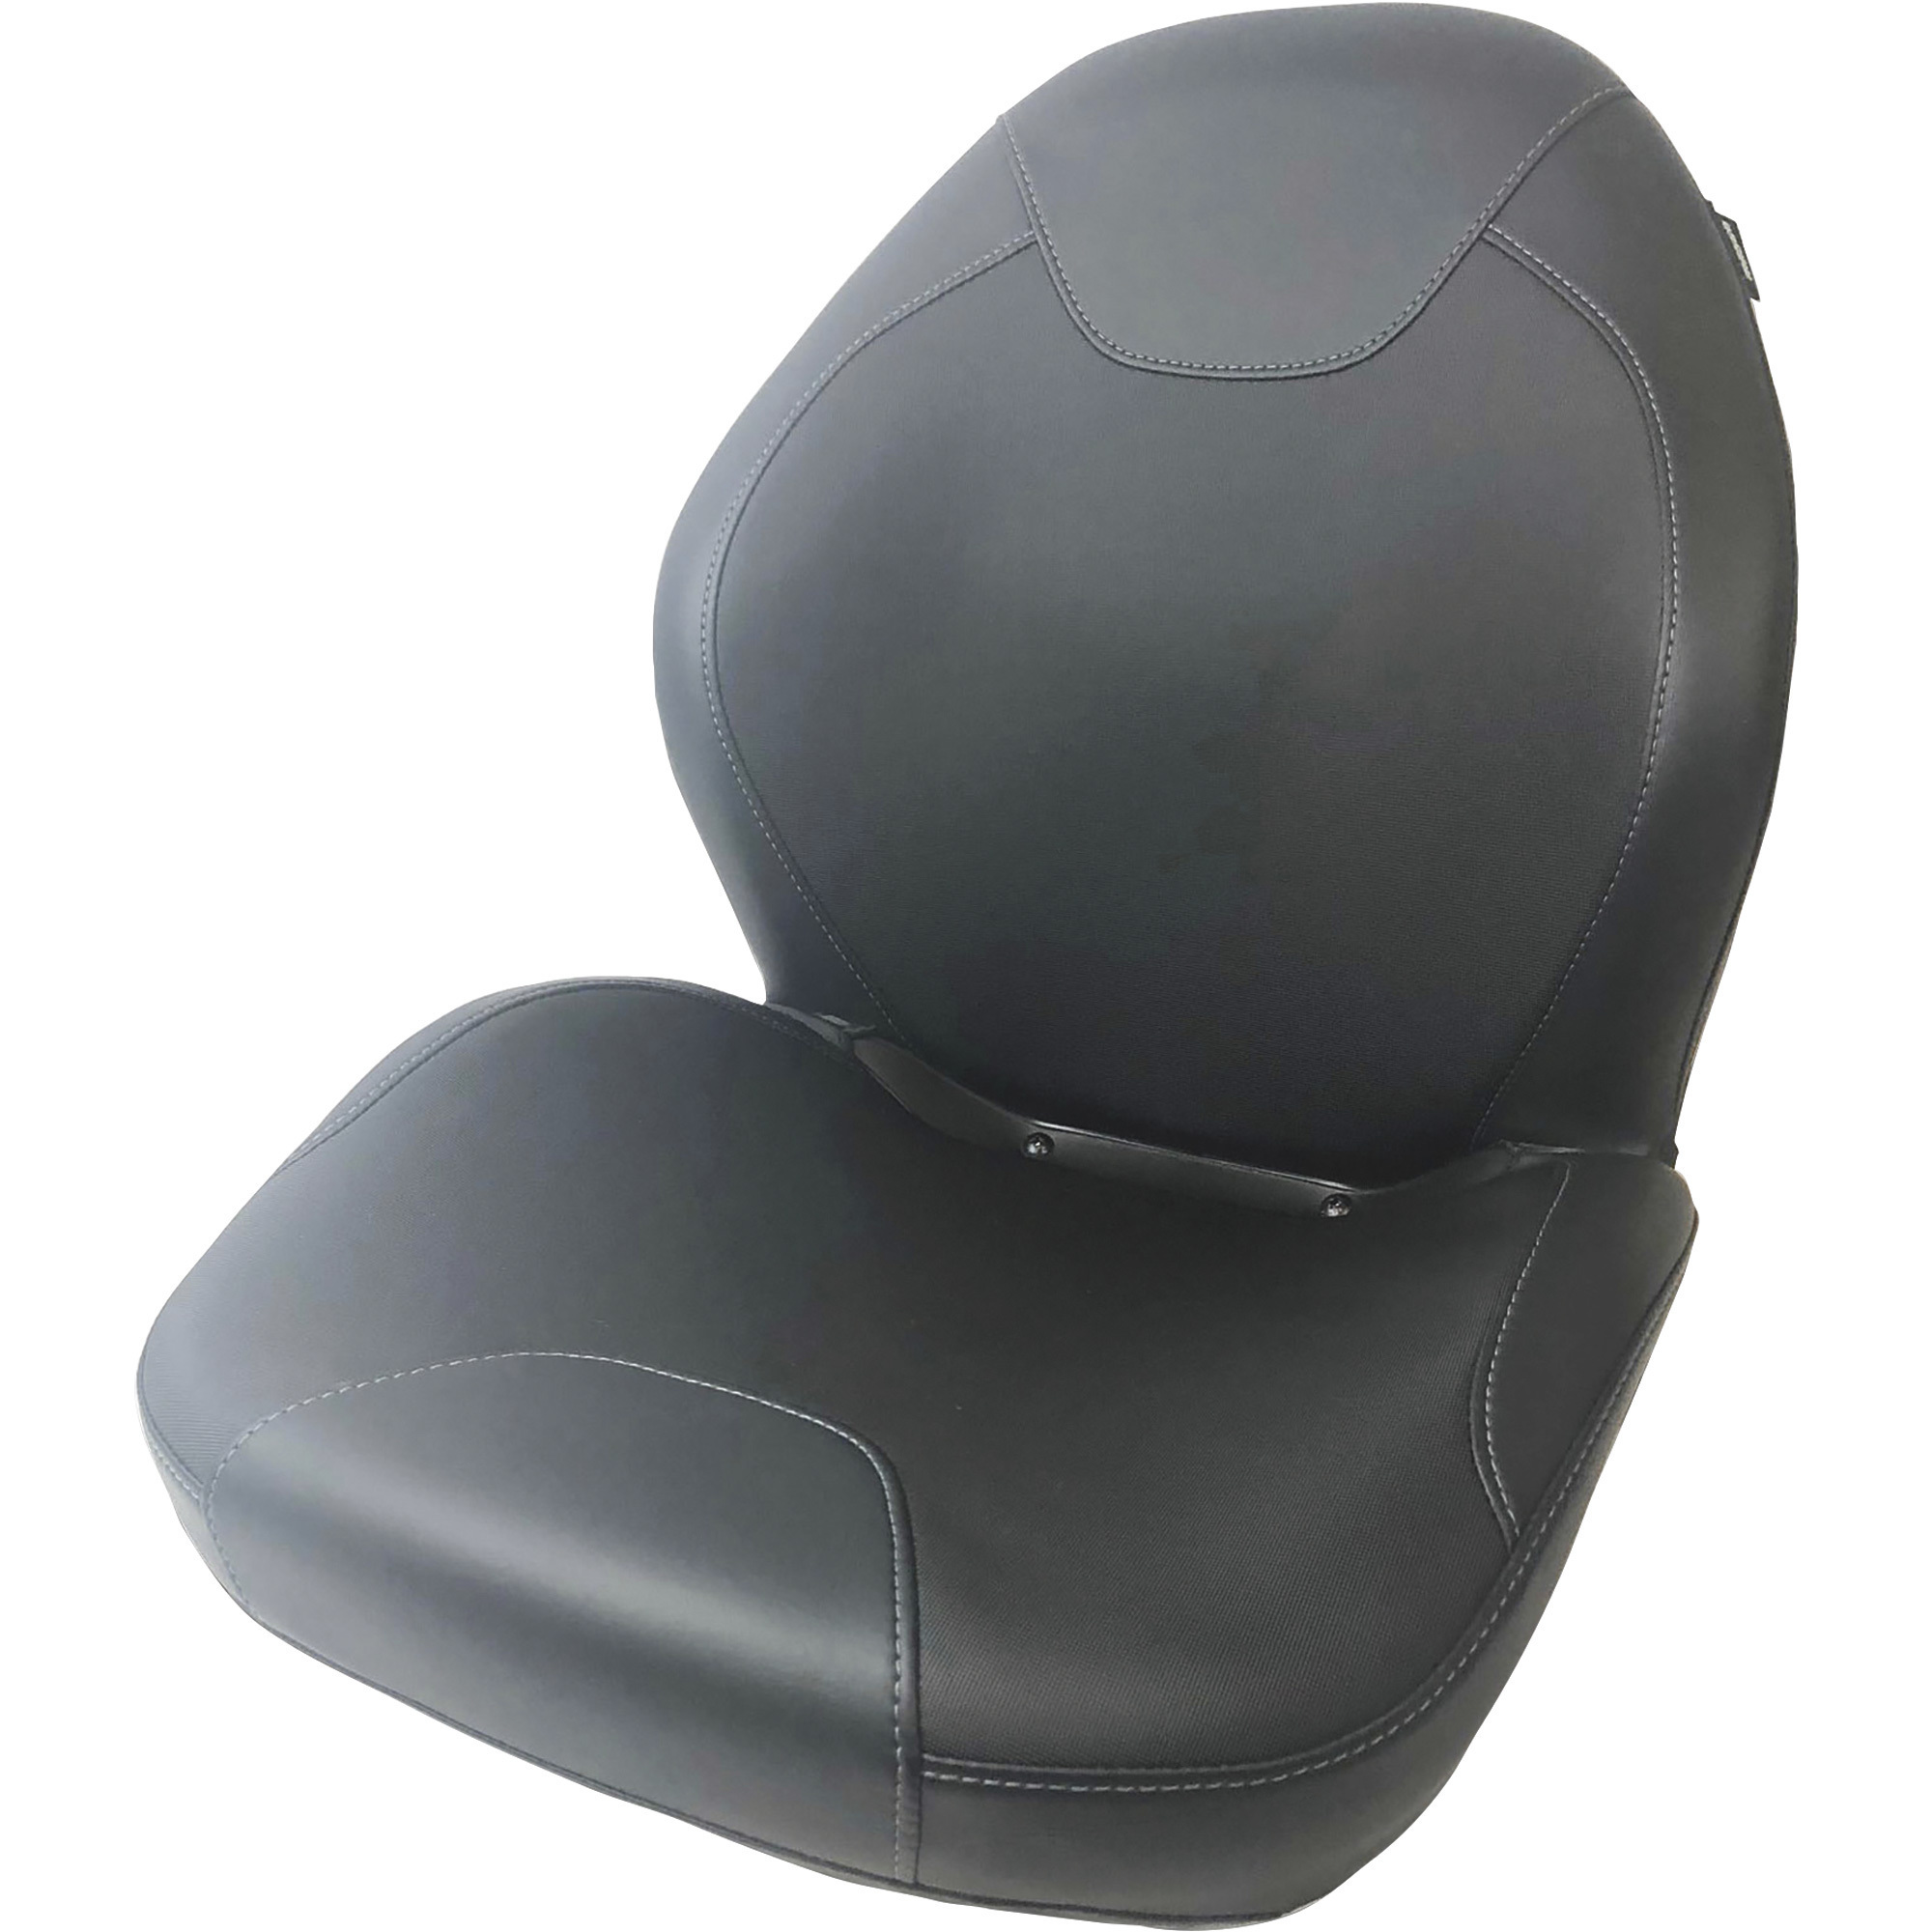 Milsco CS200 Highback Universal Lawn Mower Seat, Black, Model CS200